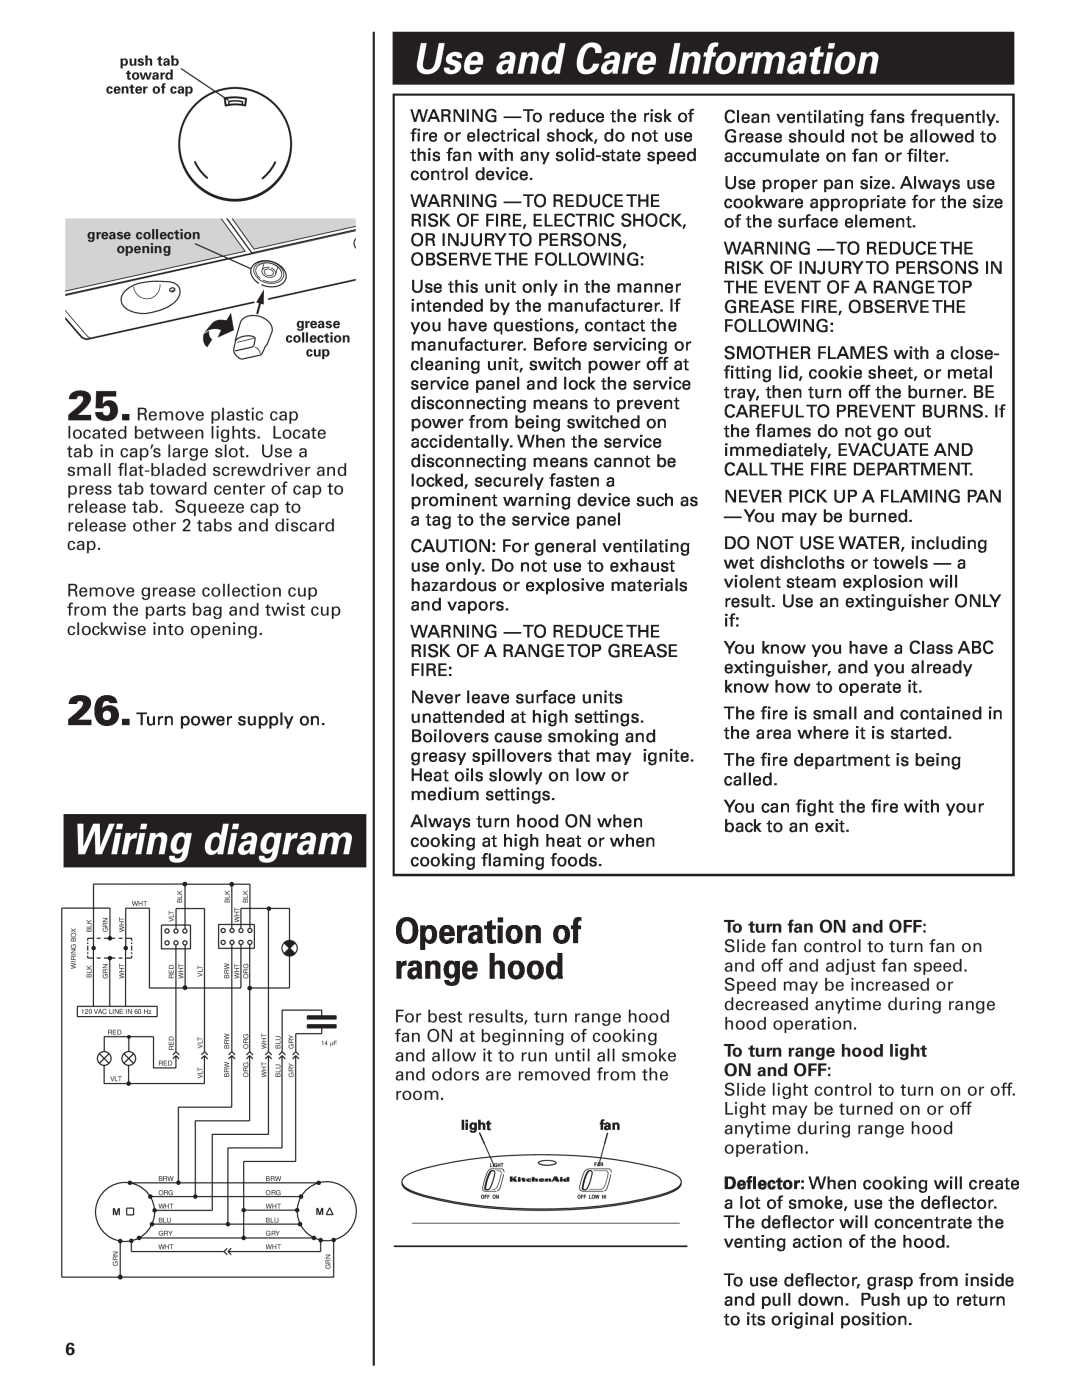 KitchenAid KHTU100 installation instructions Use and Care Information, Wiring diagram, Operation of range hood 